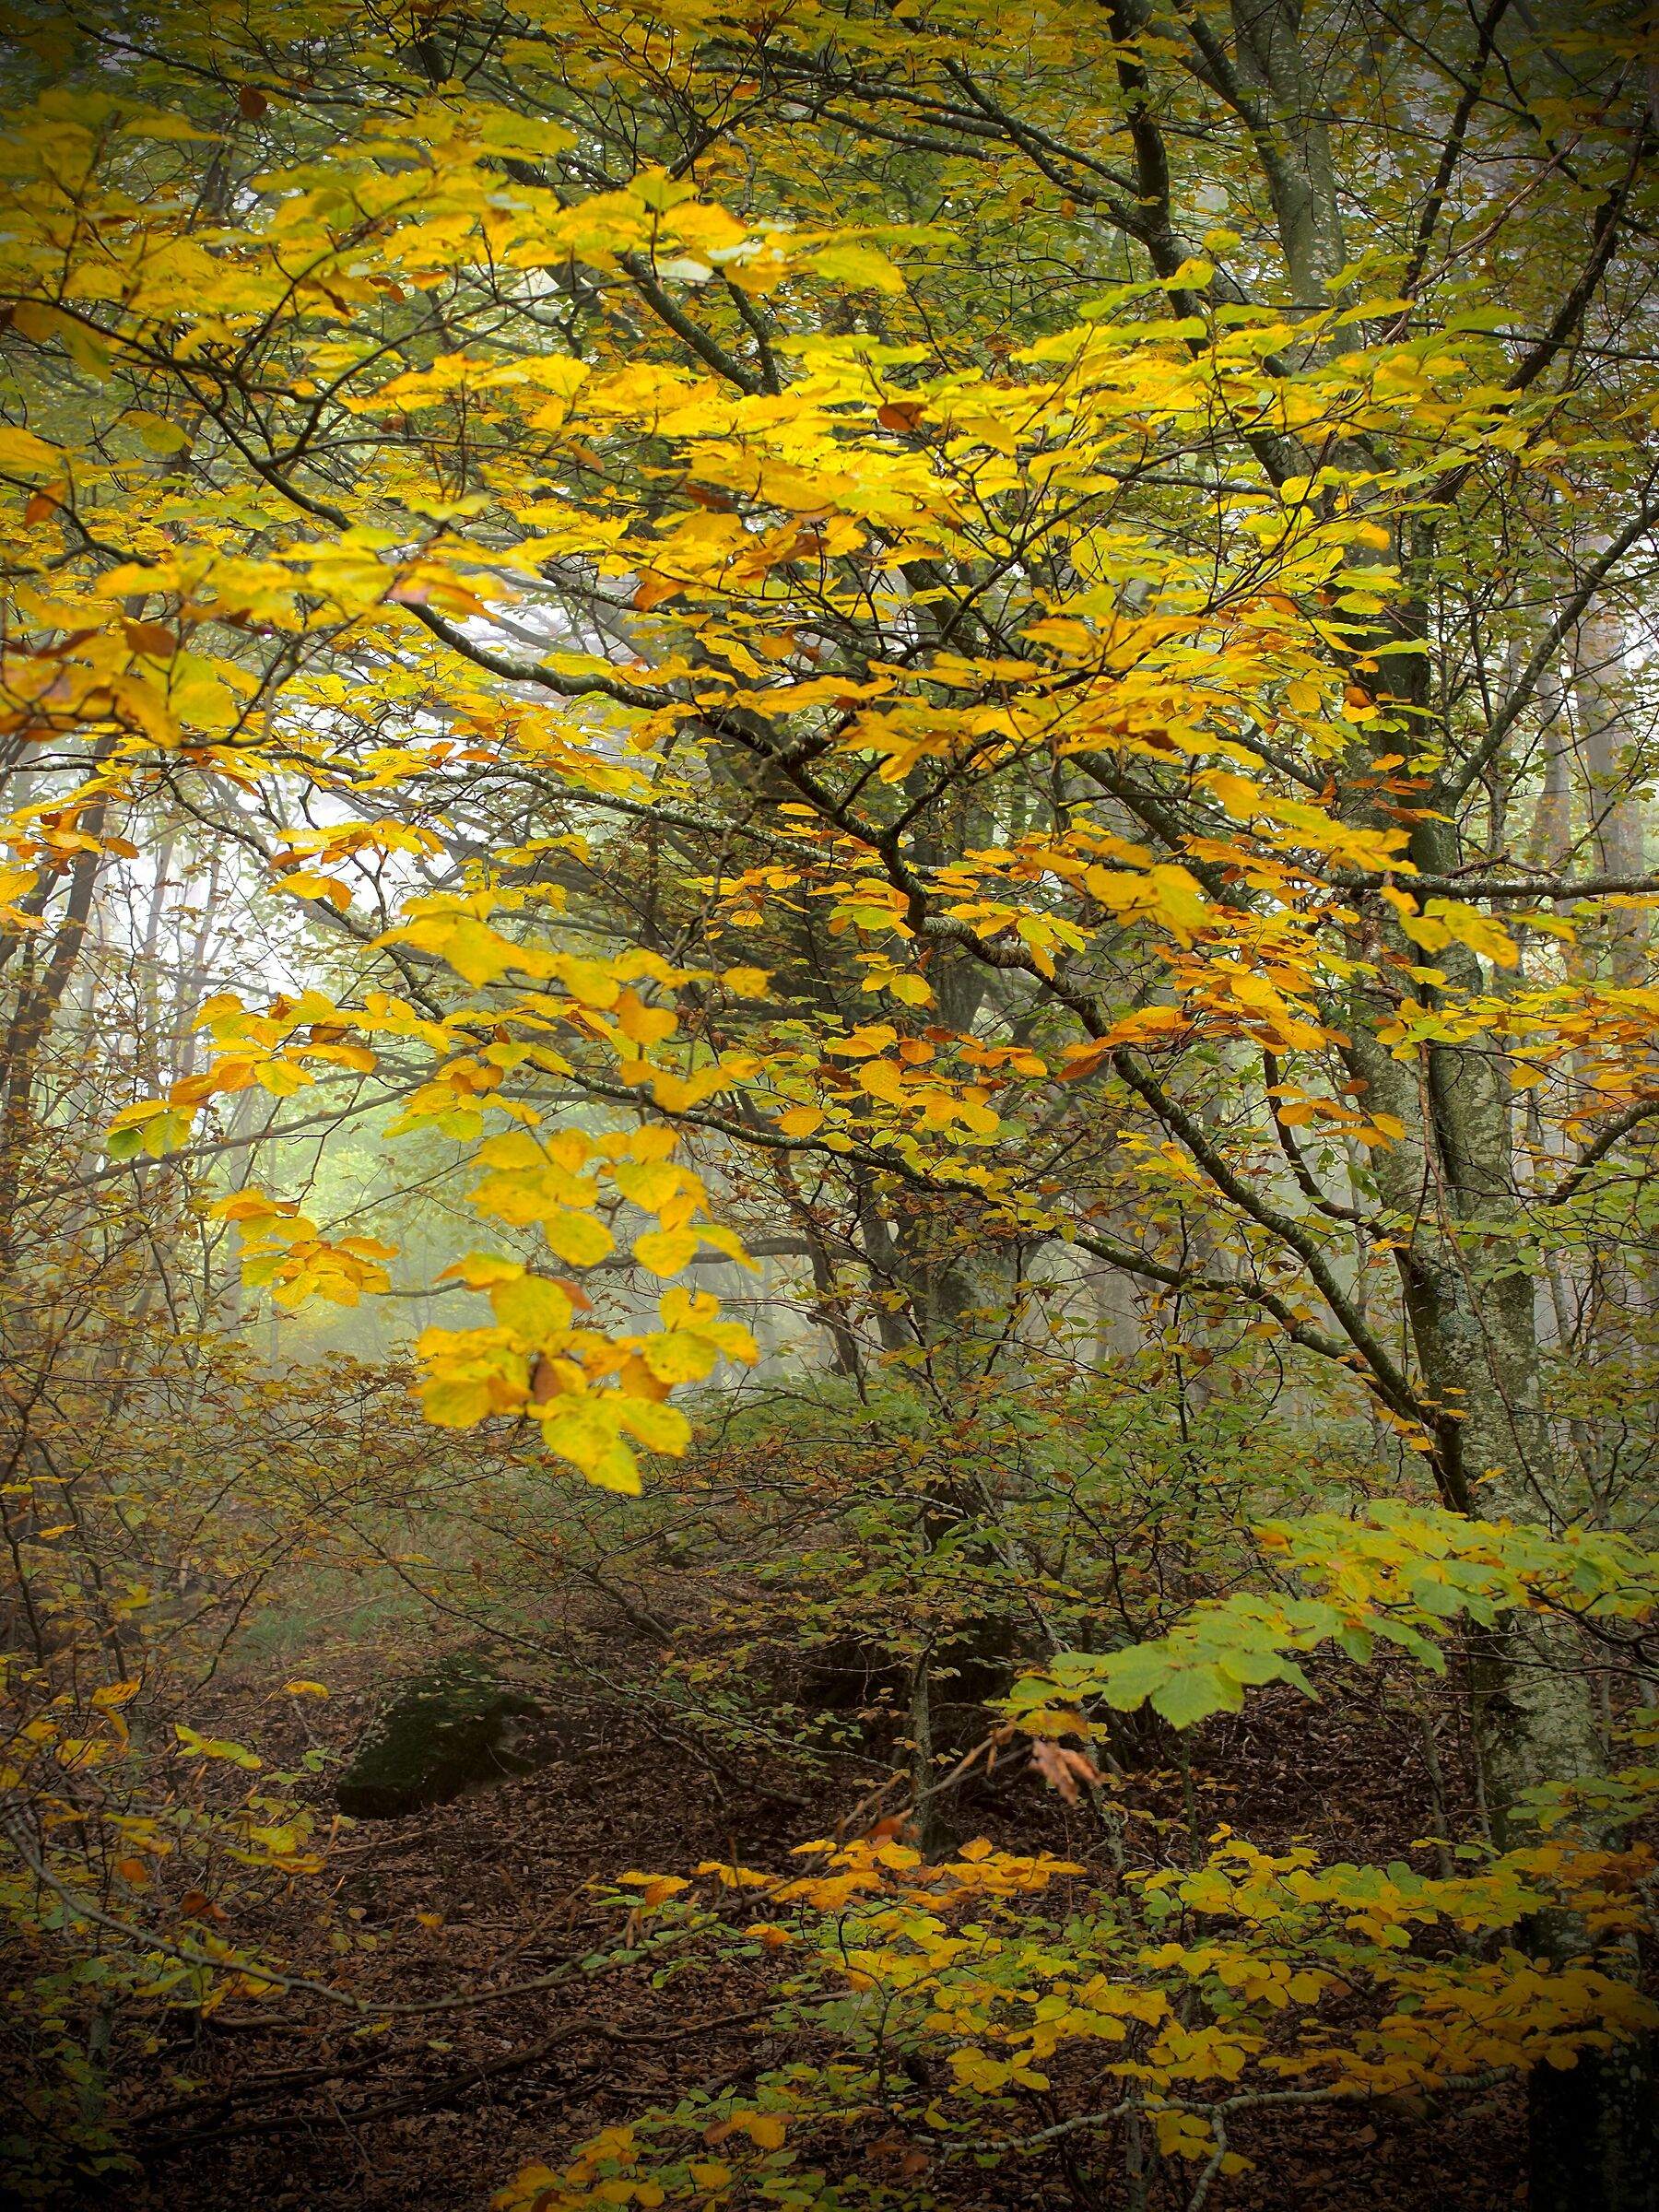 Autumn-clad trails...